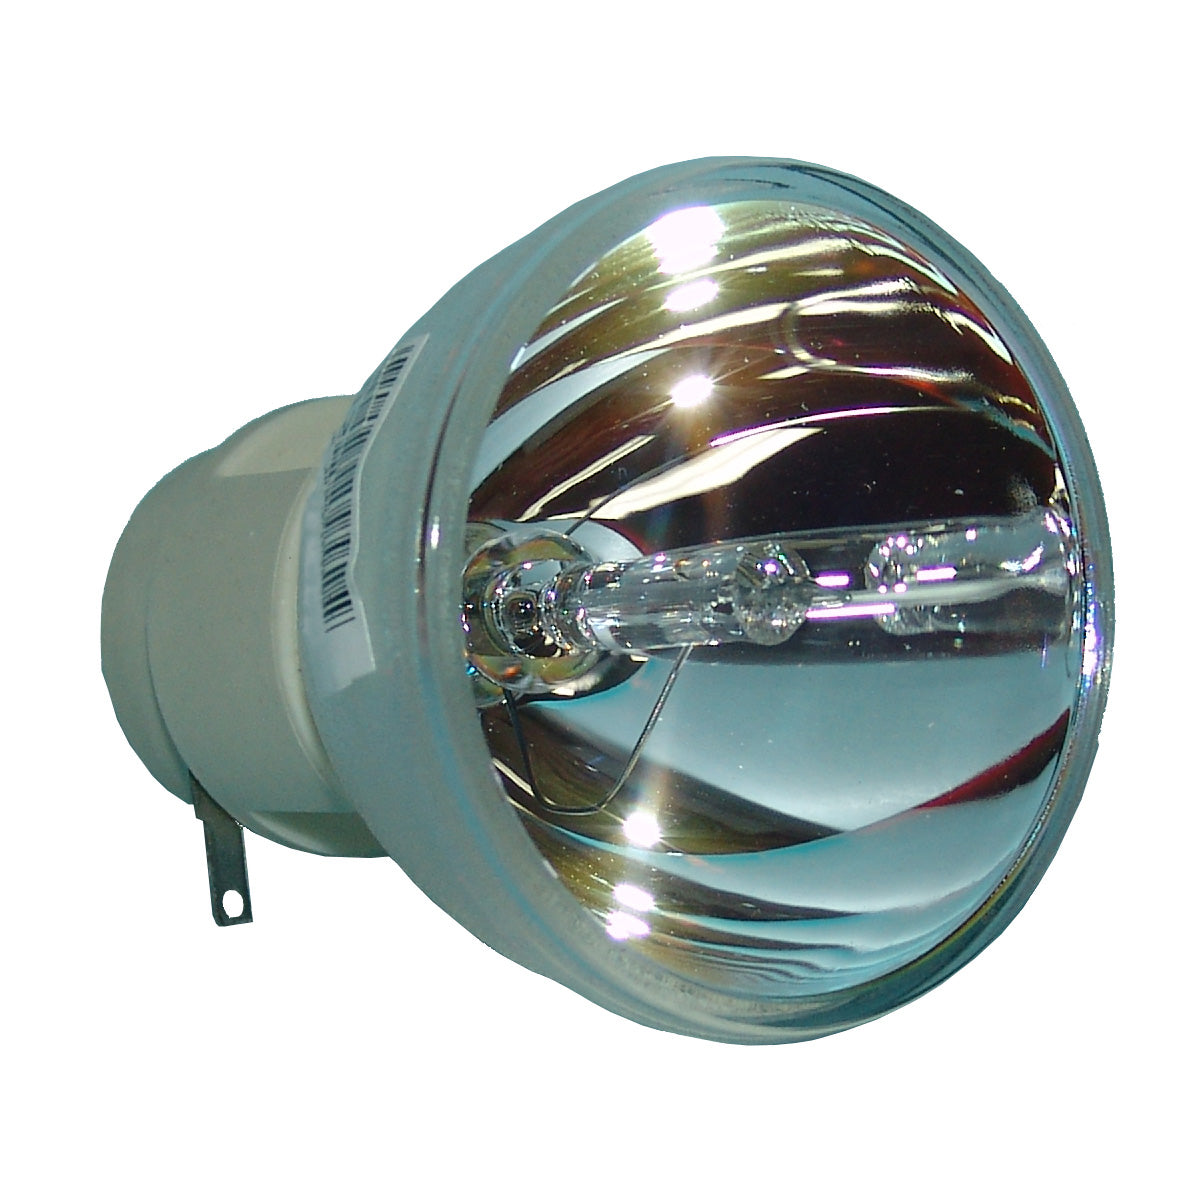 Dukane 456-8404A-3D Osram Projector Bare Lamp